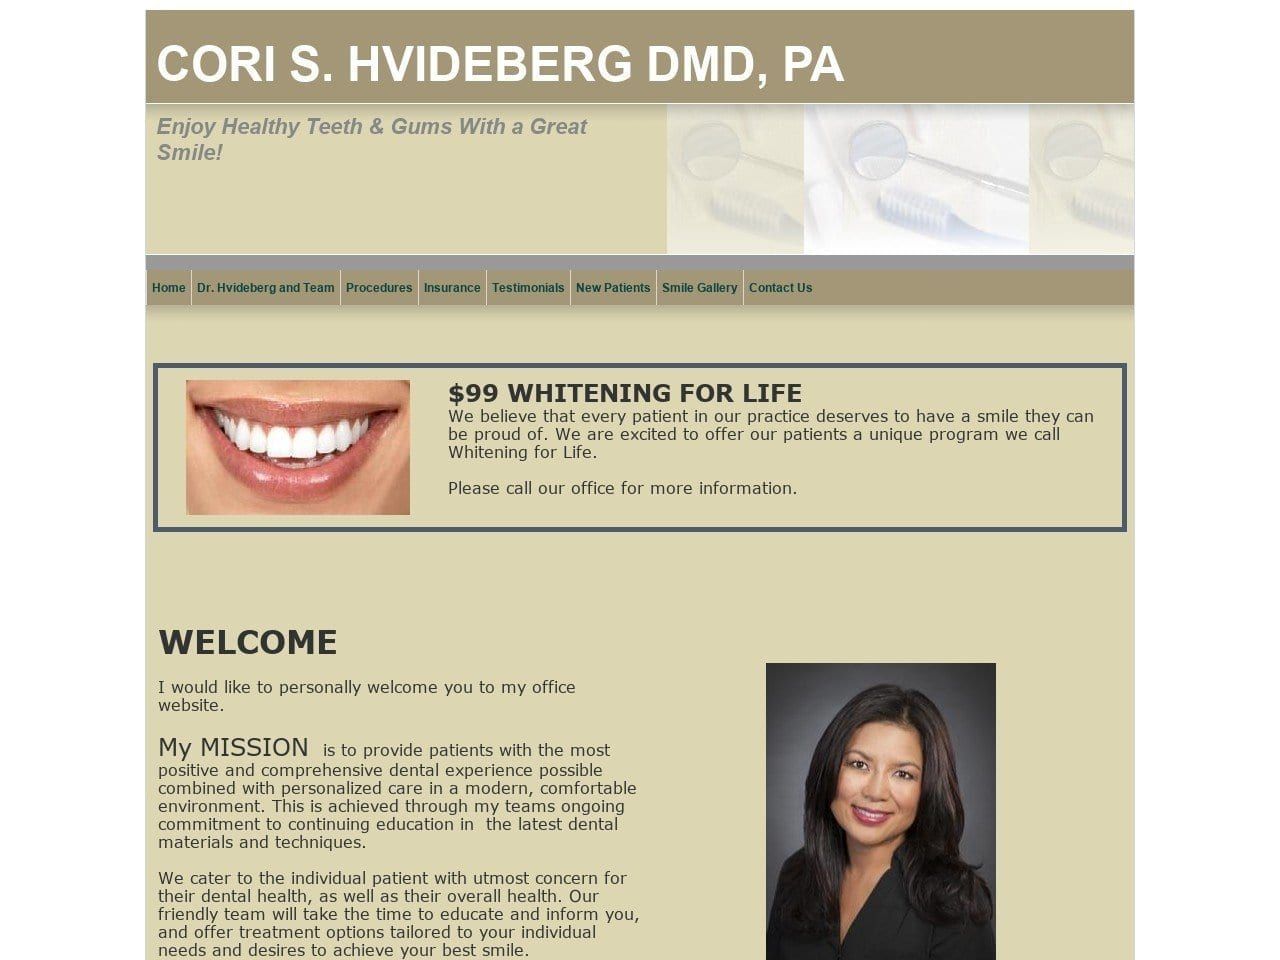 Dr. Cori S. Hvideberg DMD Website Screenshot from hvidebergdental.com